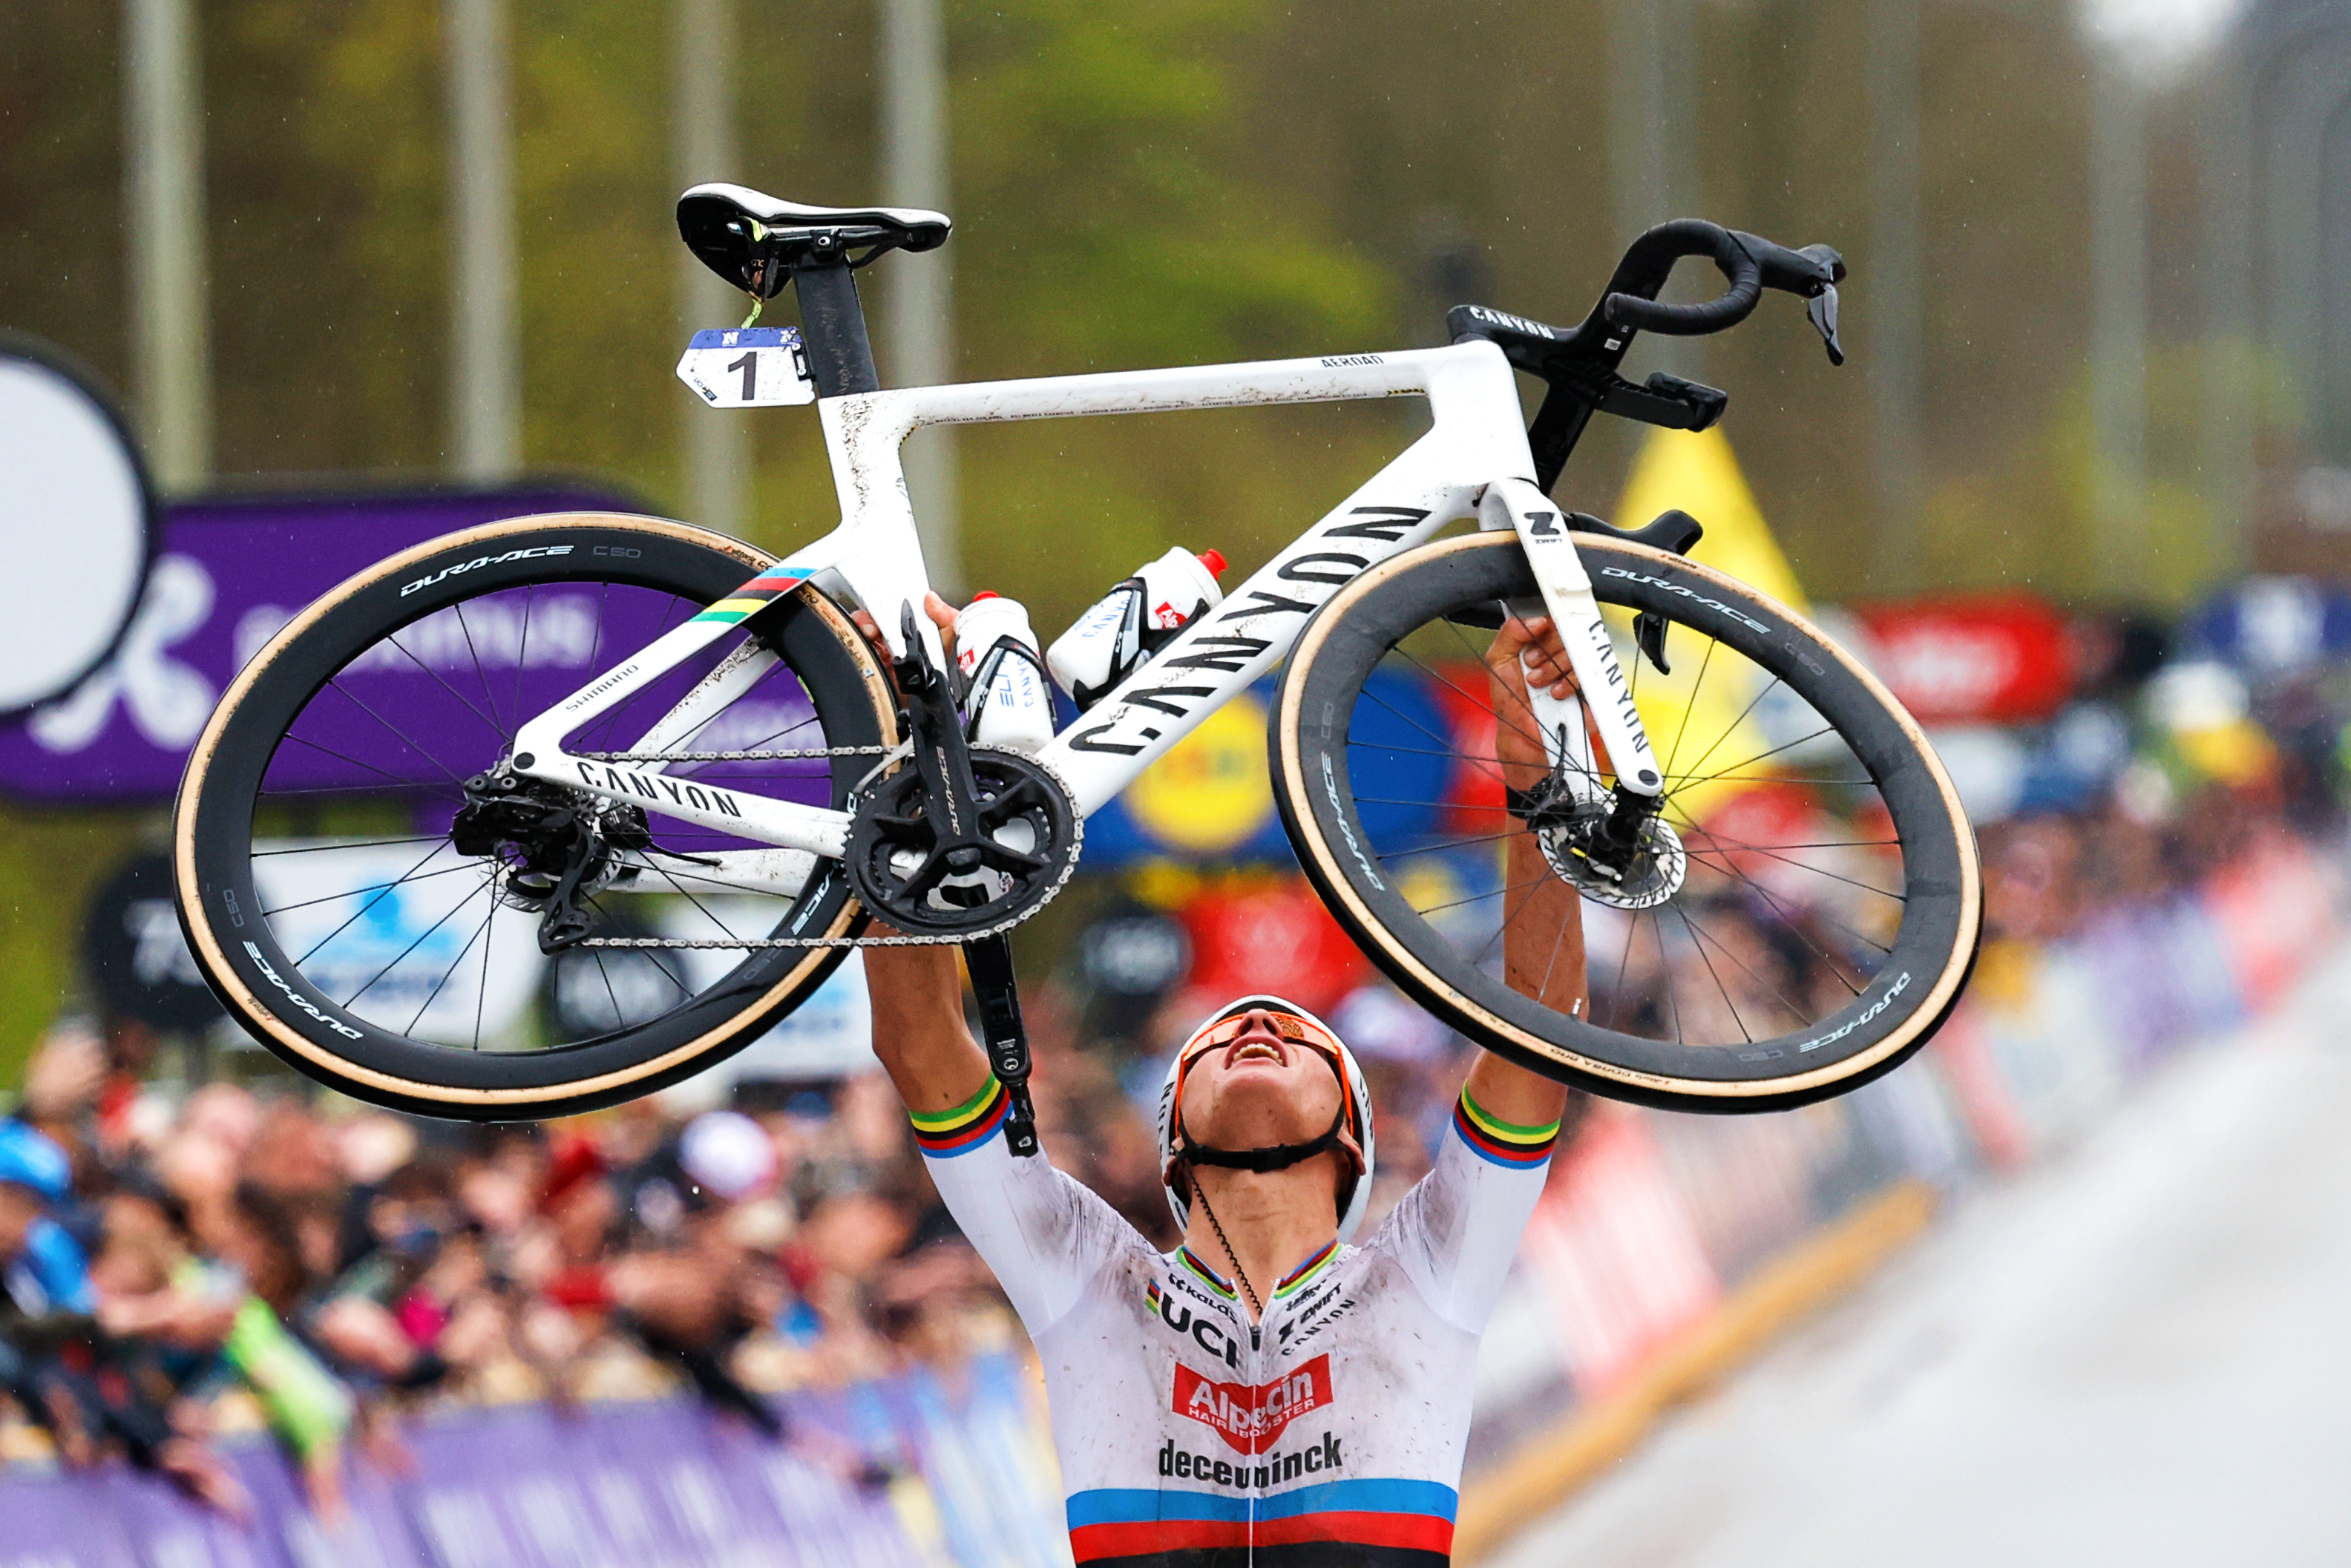 Mathieu van der Poel raises his bike alfot at the finish of the Tour of Flanders